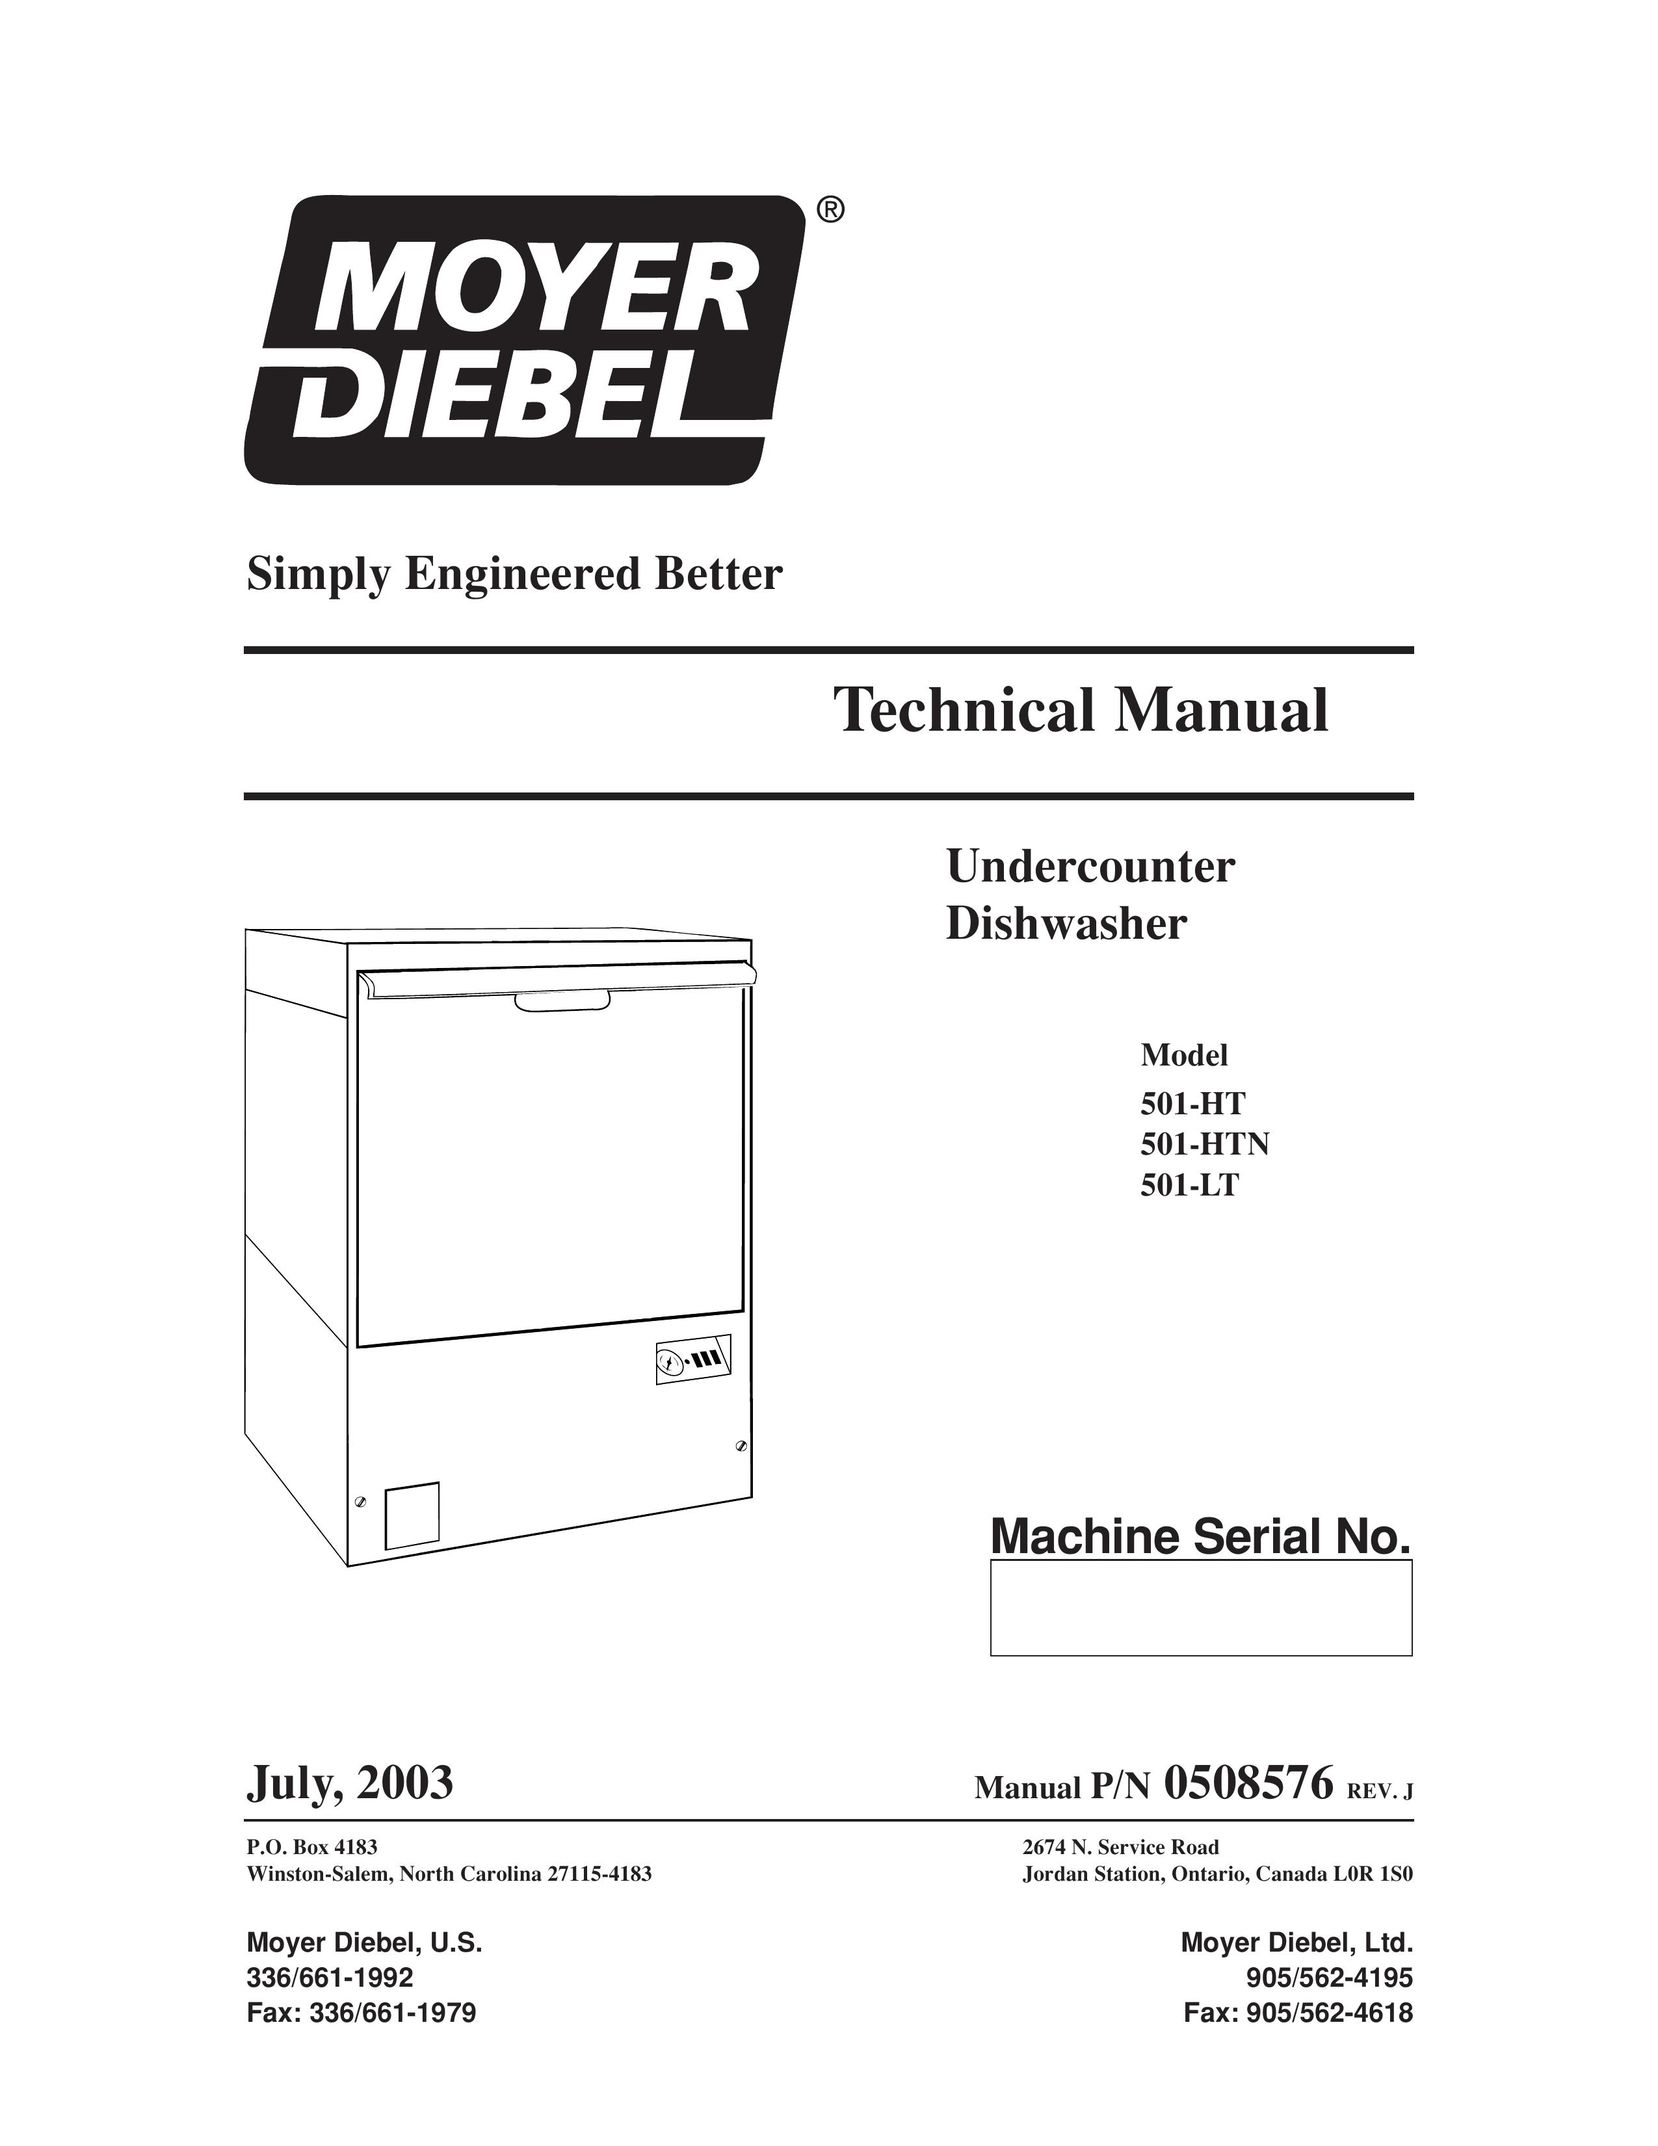 Moyer Diebel 501-LT Dishwasher User Manual